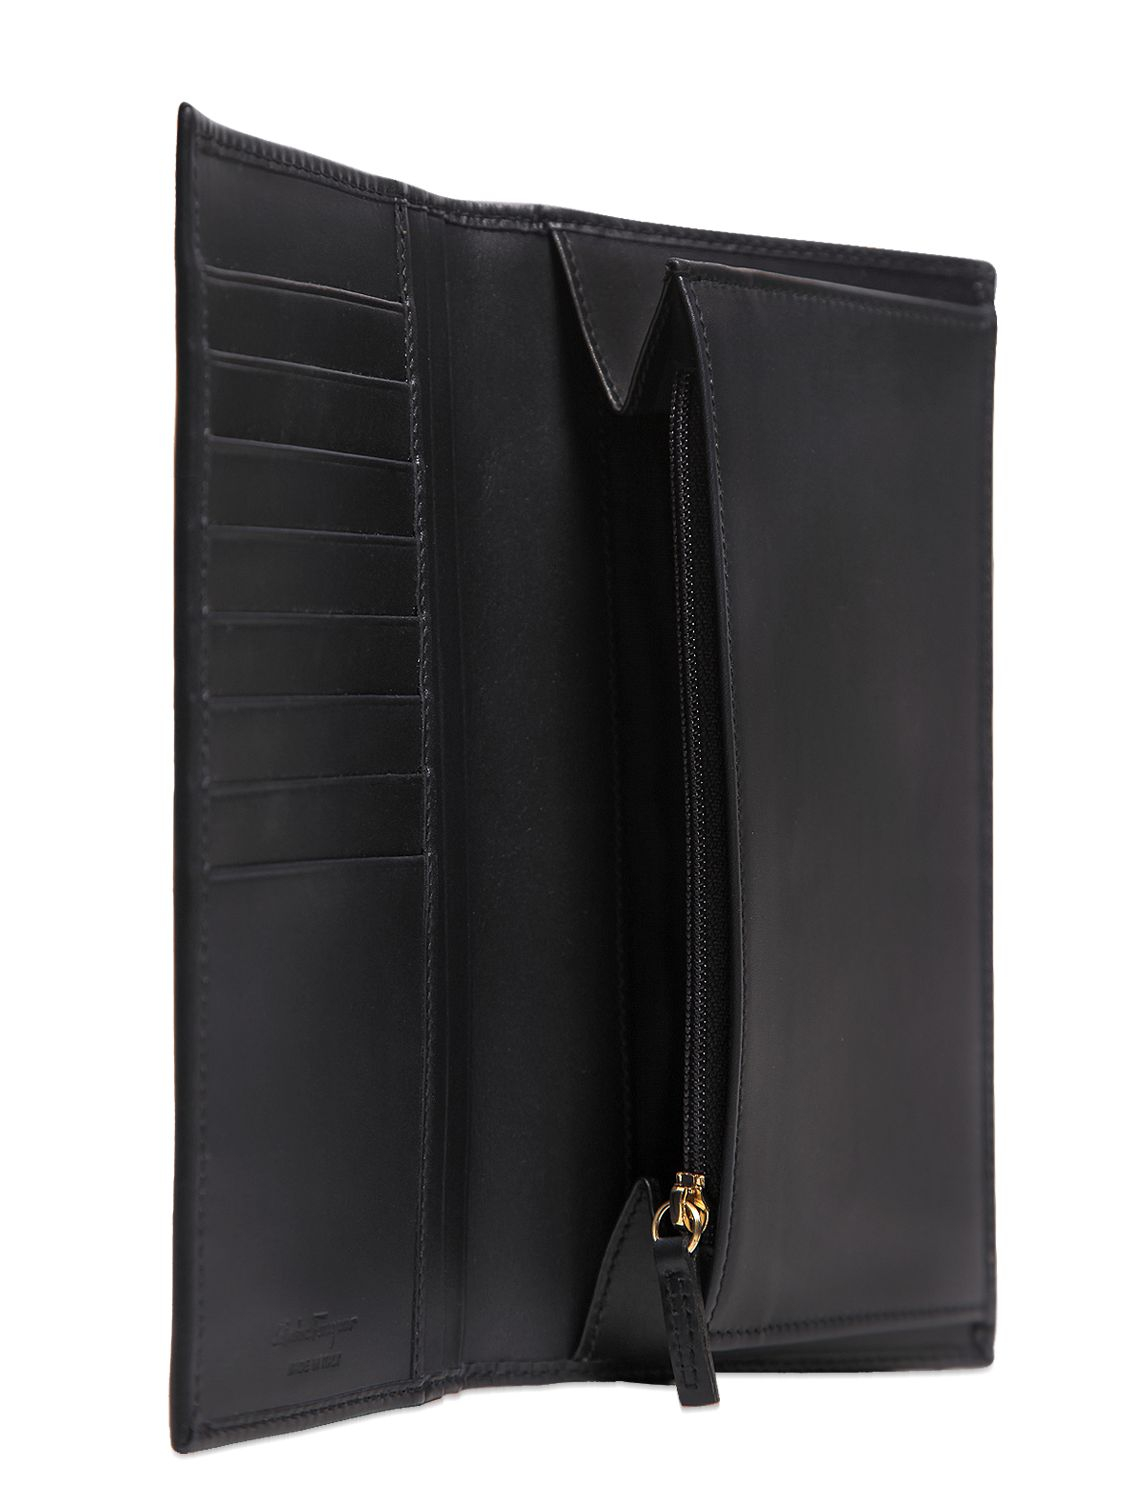 Lyst - Ferragamo Renaissance Leather Continental Wallet in Black for Men